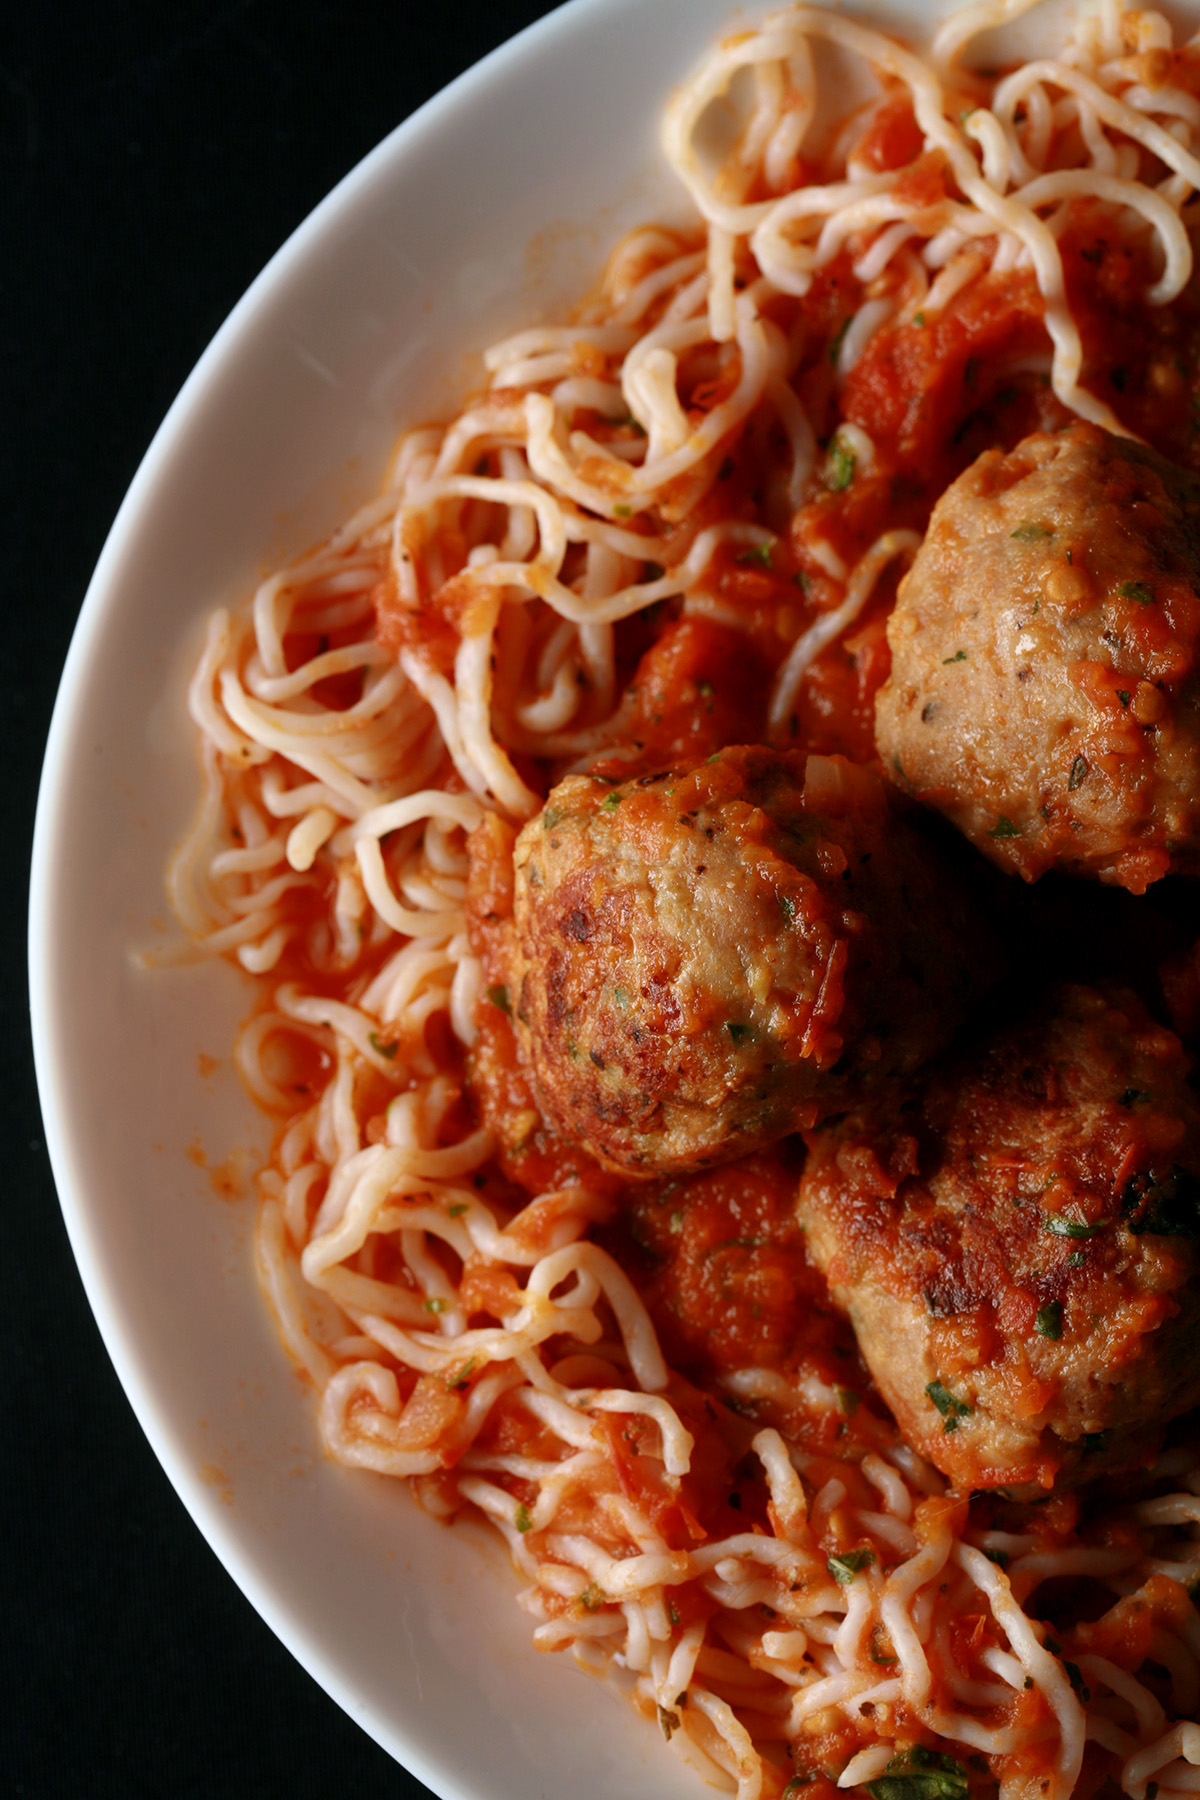 A plate of keto spaghetti and meatballs.